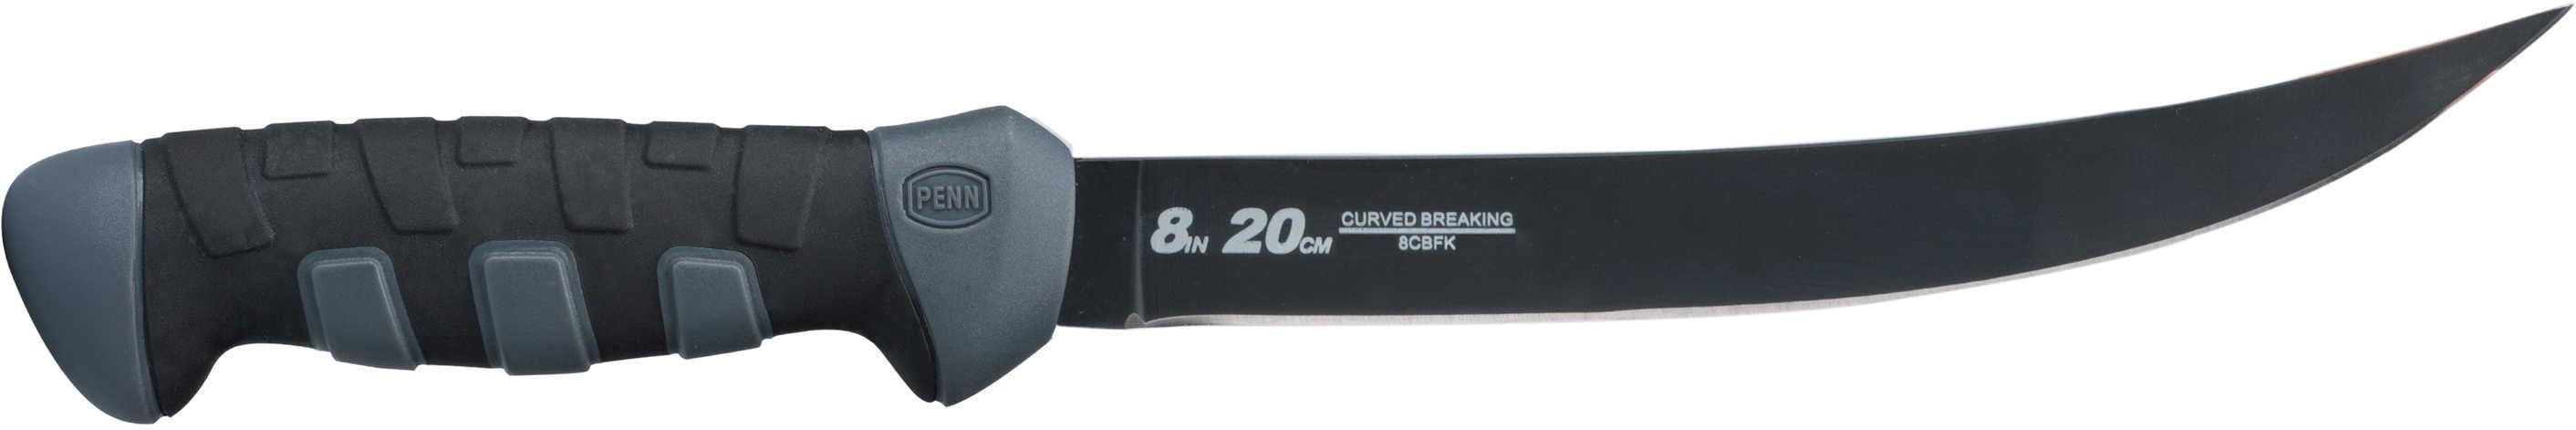 Penn Fillet Knives 8" Curved Breaking, Black/Gray Md: 1366263